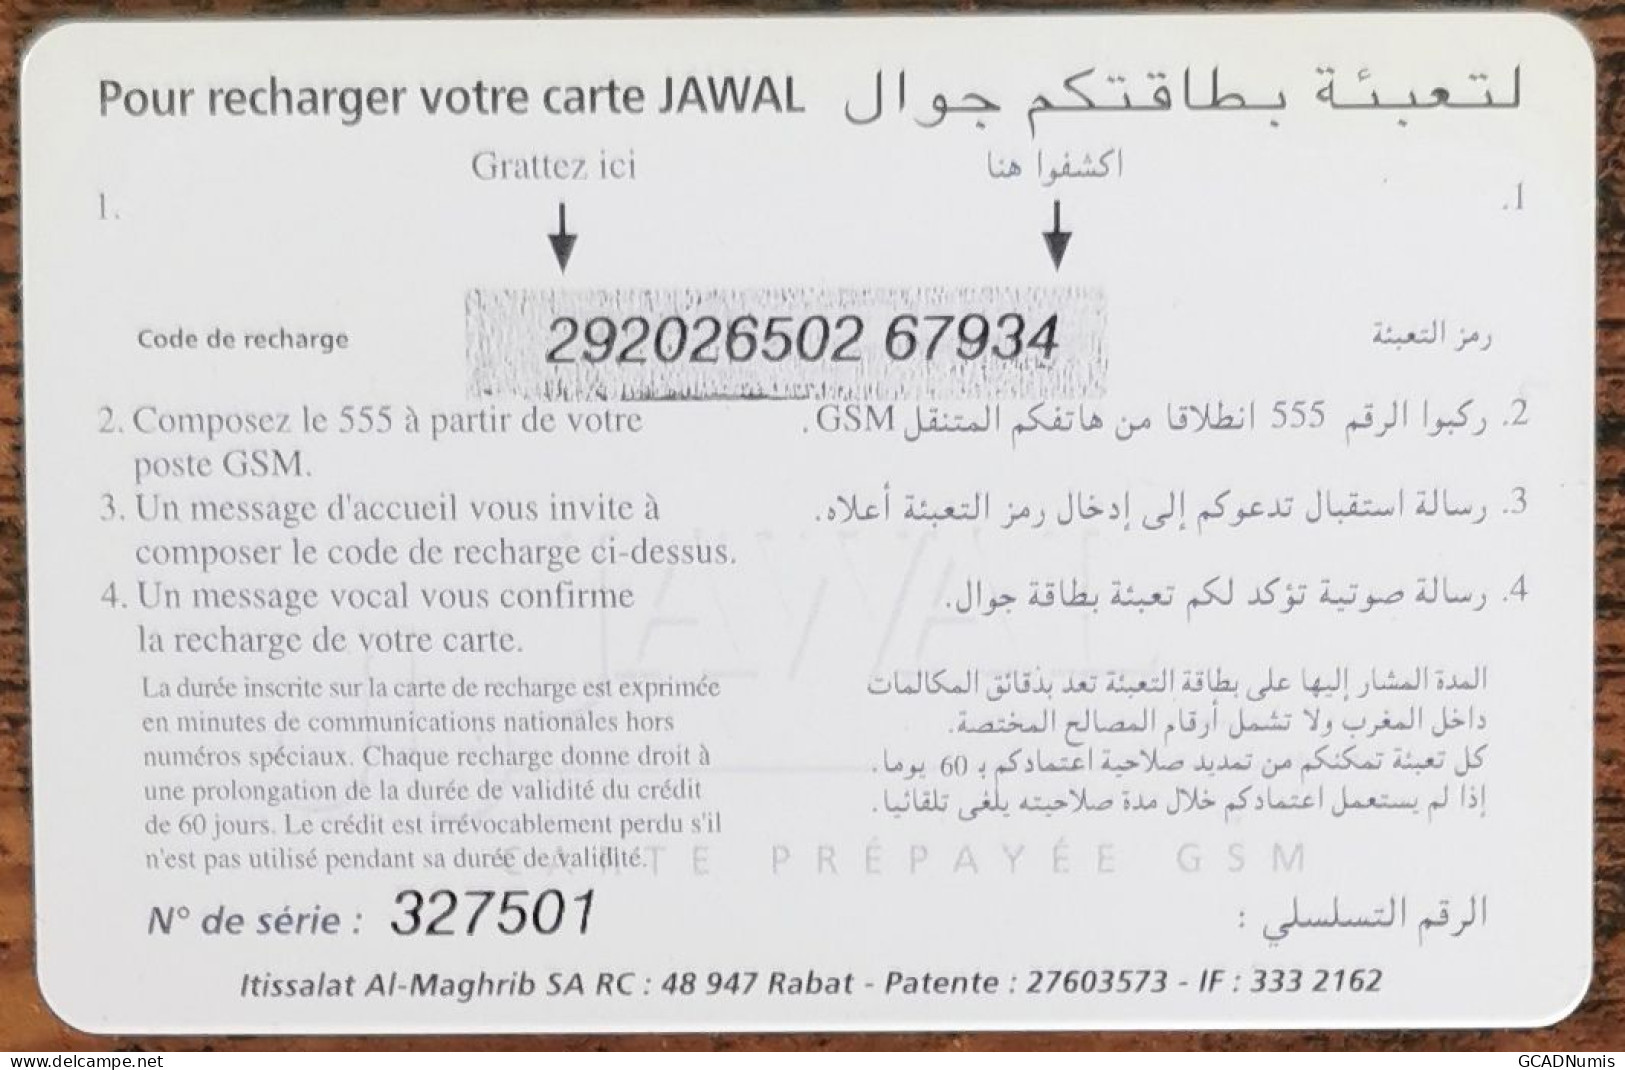 Carte De Recharge - Jawal 30mn Mobile Refill Maroc Telecom - Télécarte ~45 - Marruecos